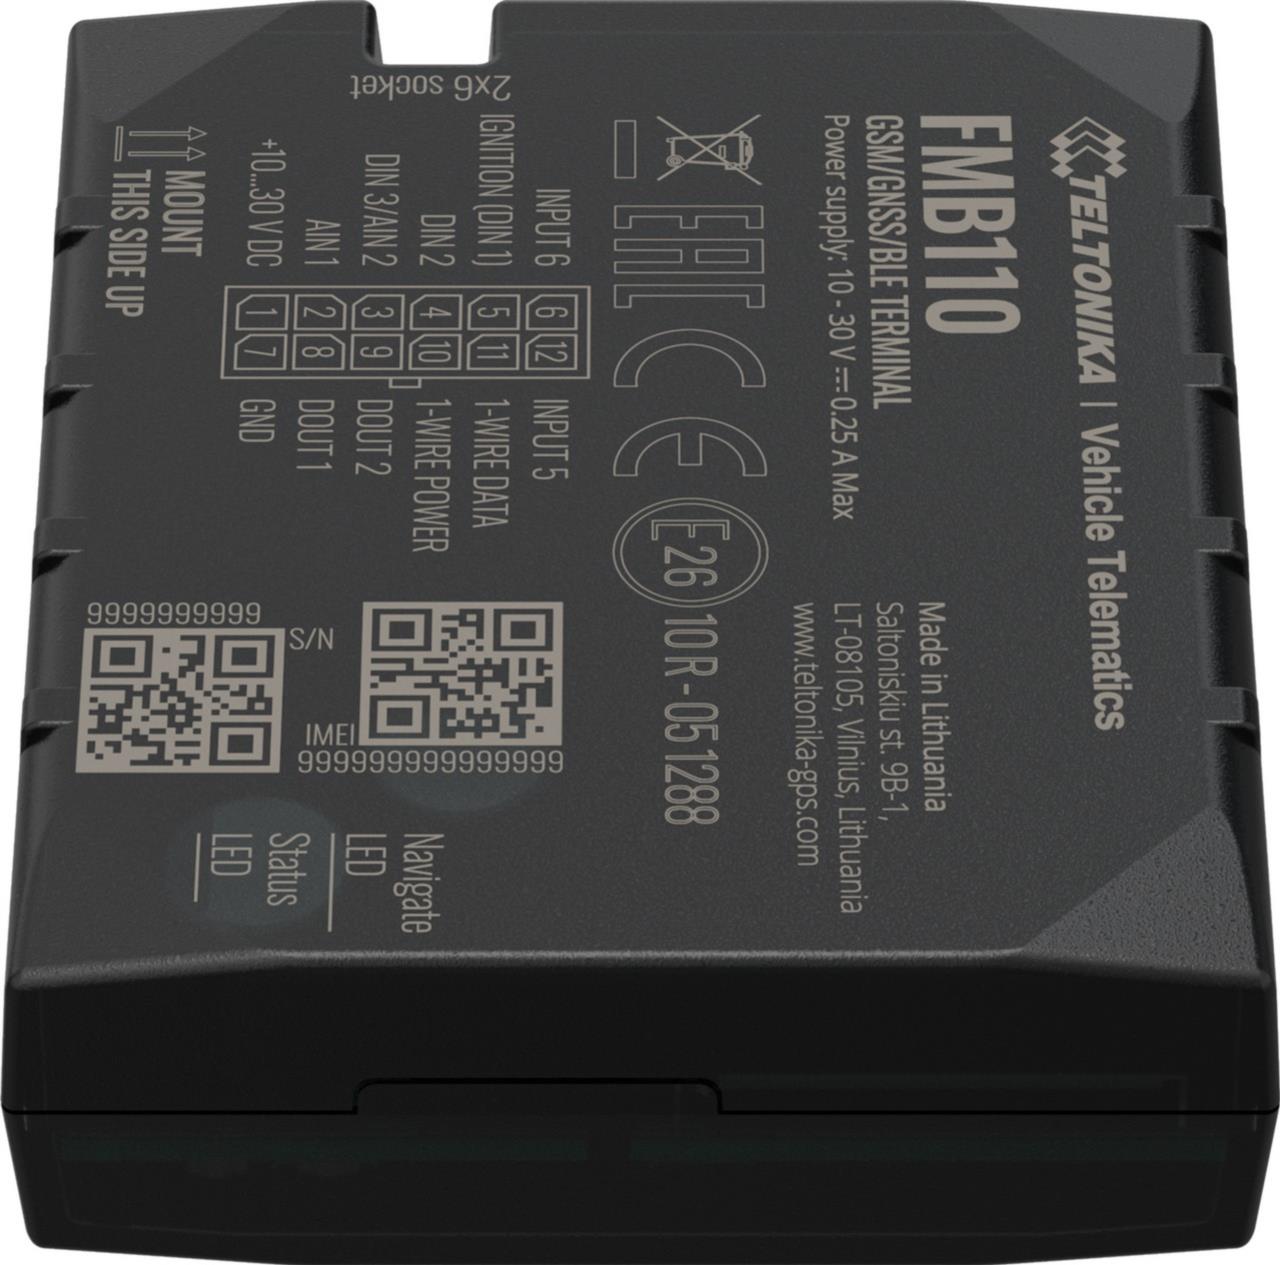 FMB110 GNSS/GSM/Bluetooth Tracker mit interner GNSS/GSM Antenne